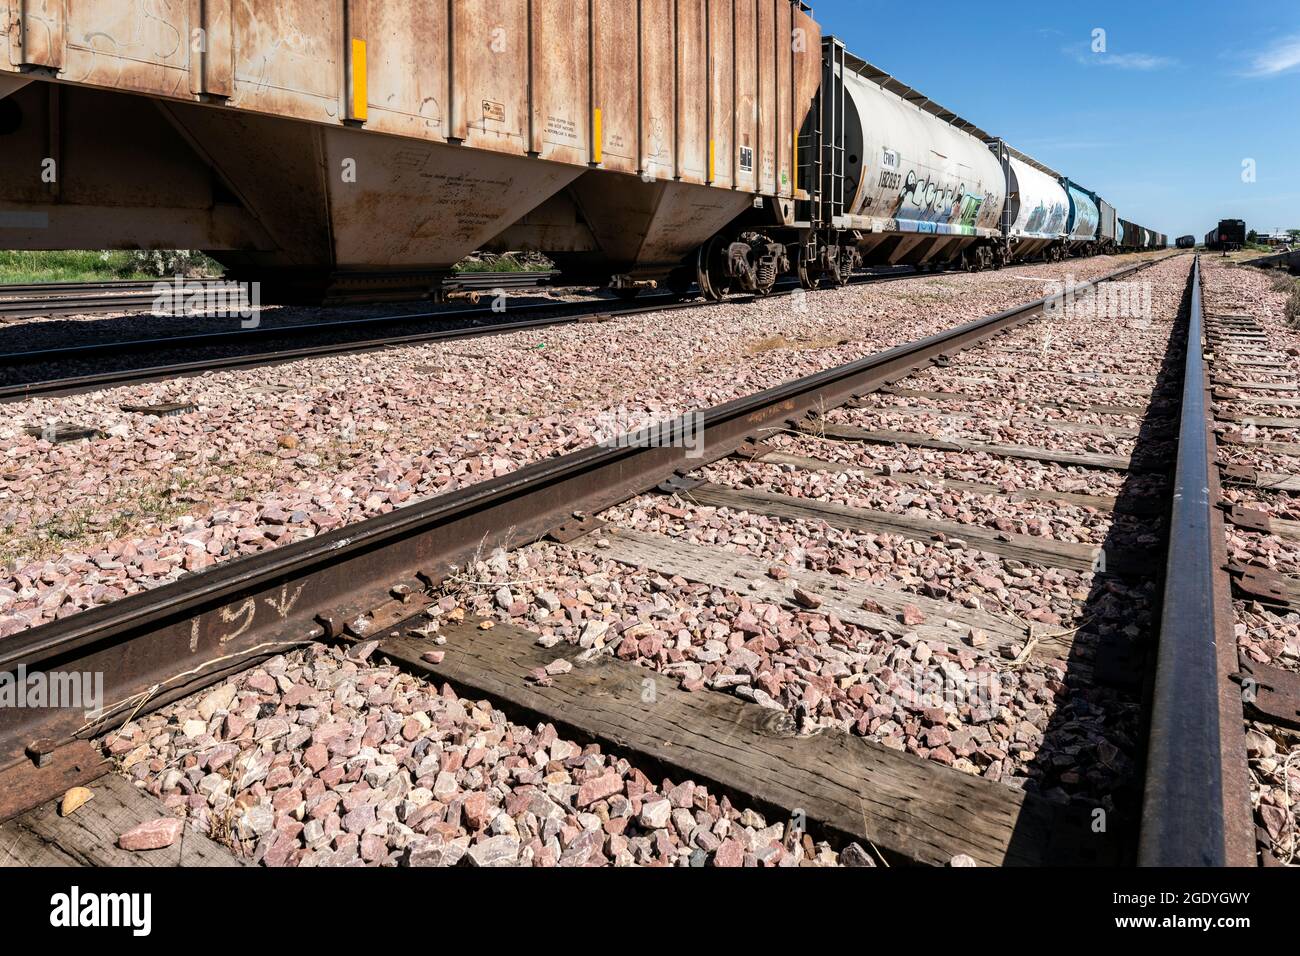 SD00440-00....SOUTH DAKOTA - Rail yard and train tracks in the town of Wall. Stock Photo